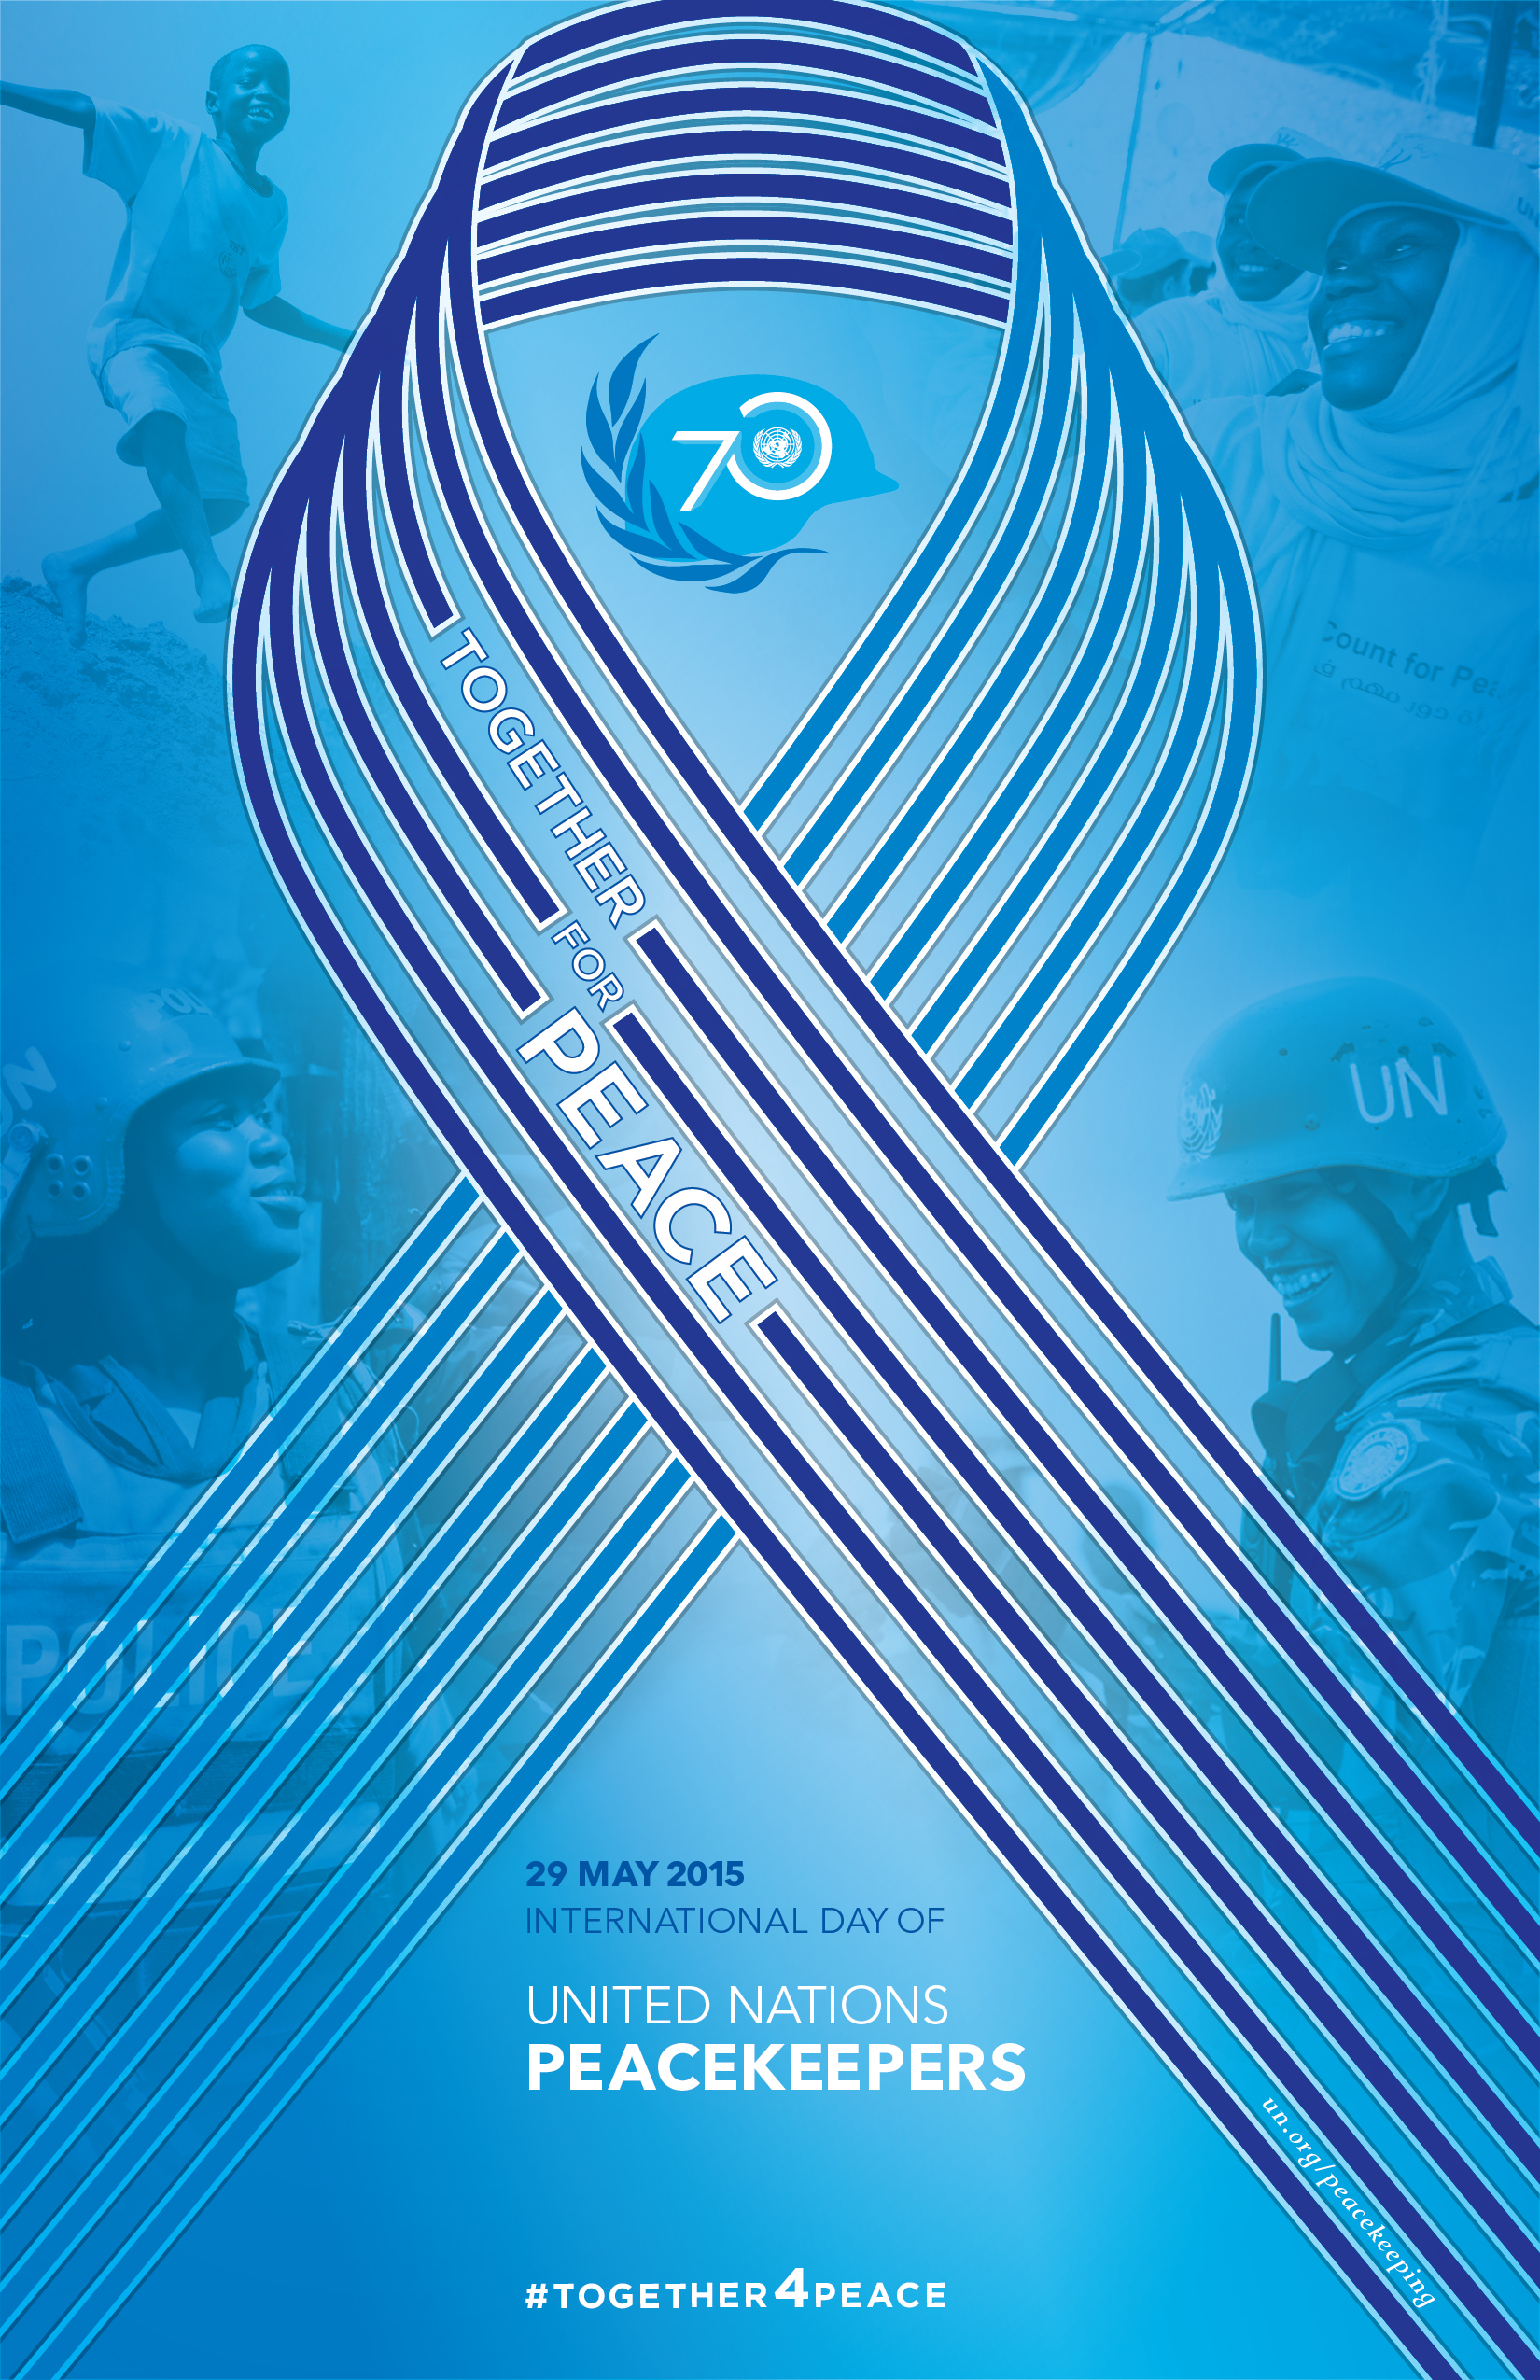 Оон 29. 29 May International un peacekeeping. Международный день миротворцев. Международный день миротворцев ООН. 29 Мая день миротворцев ООН.